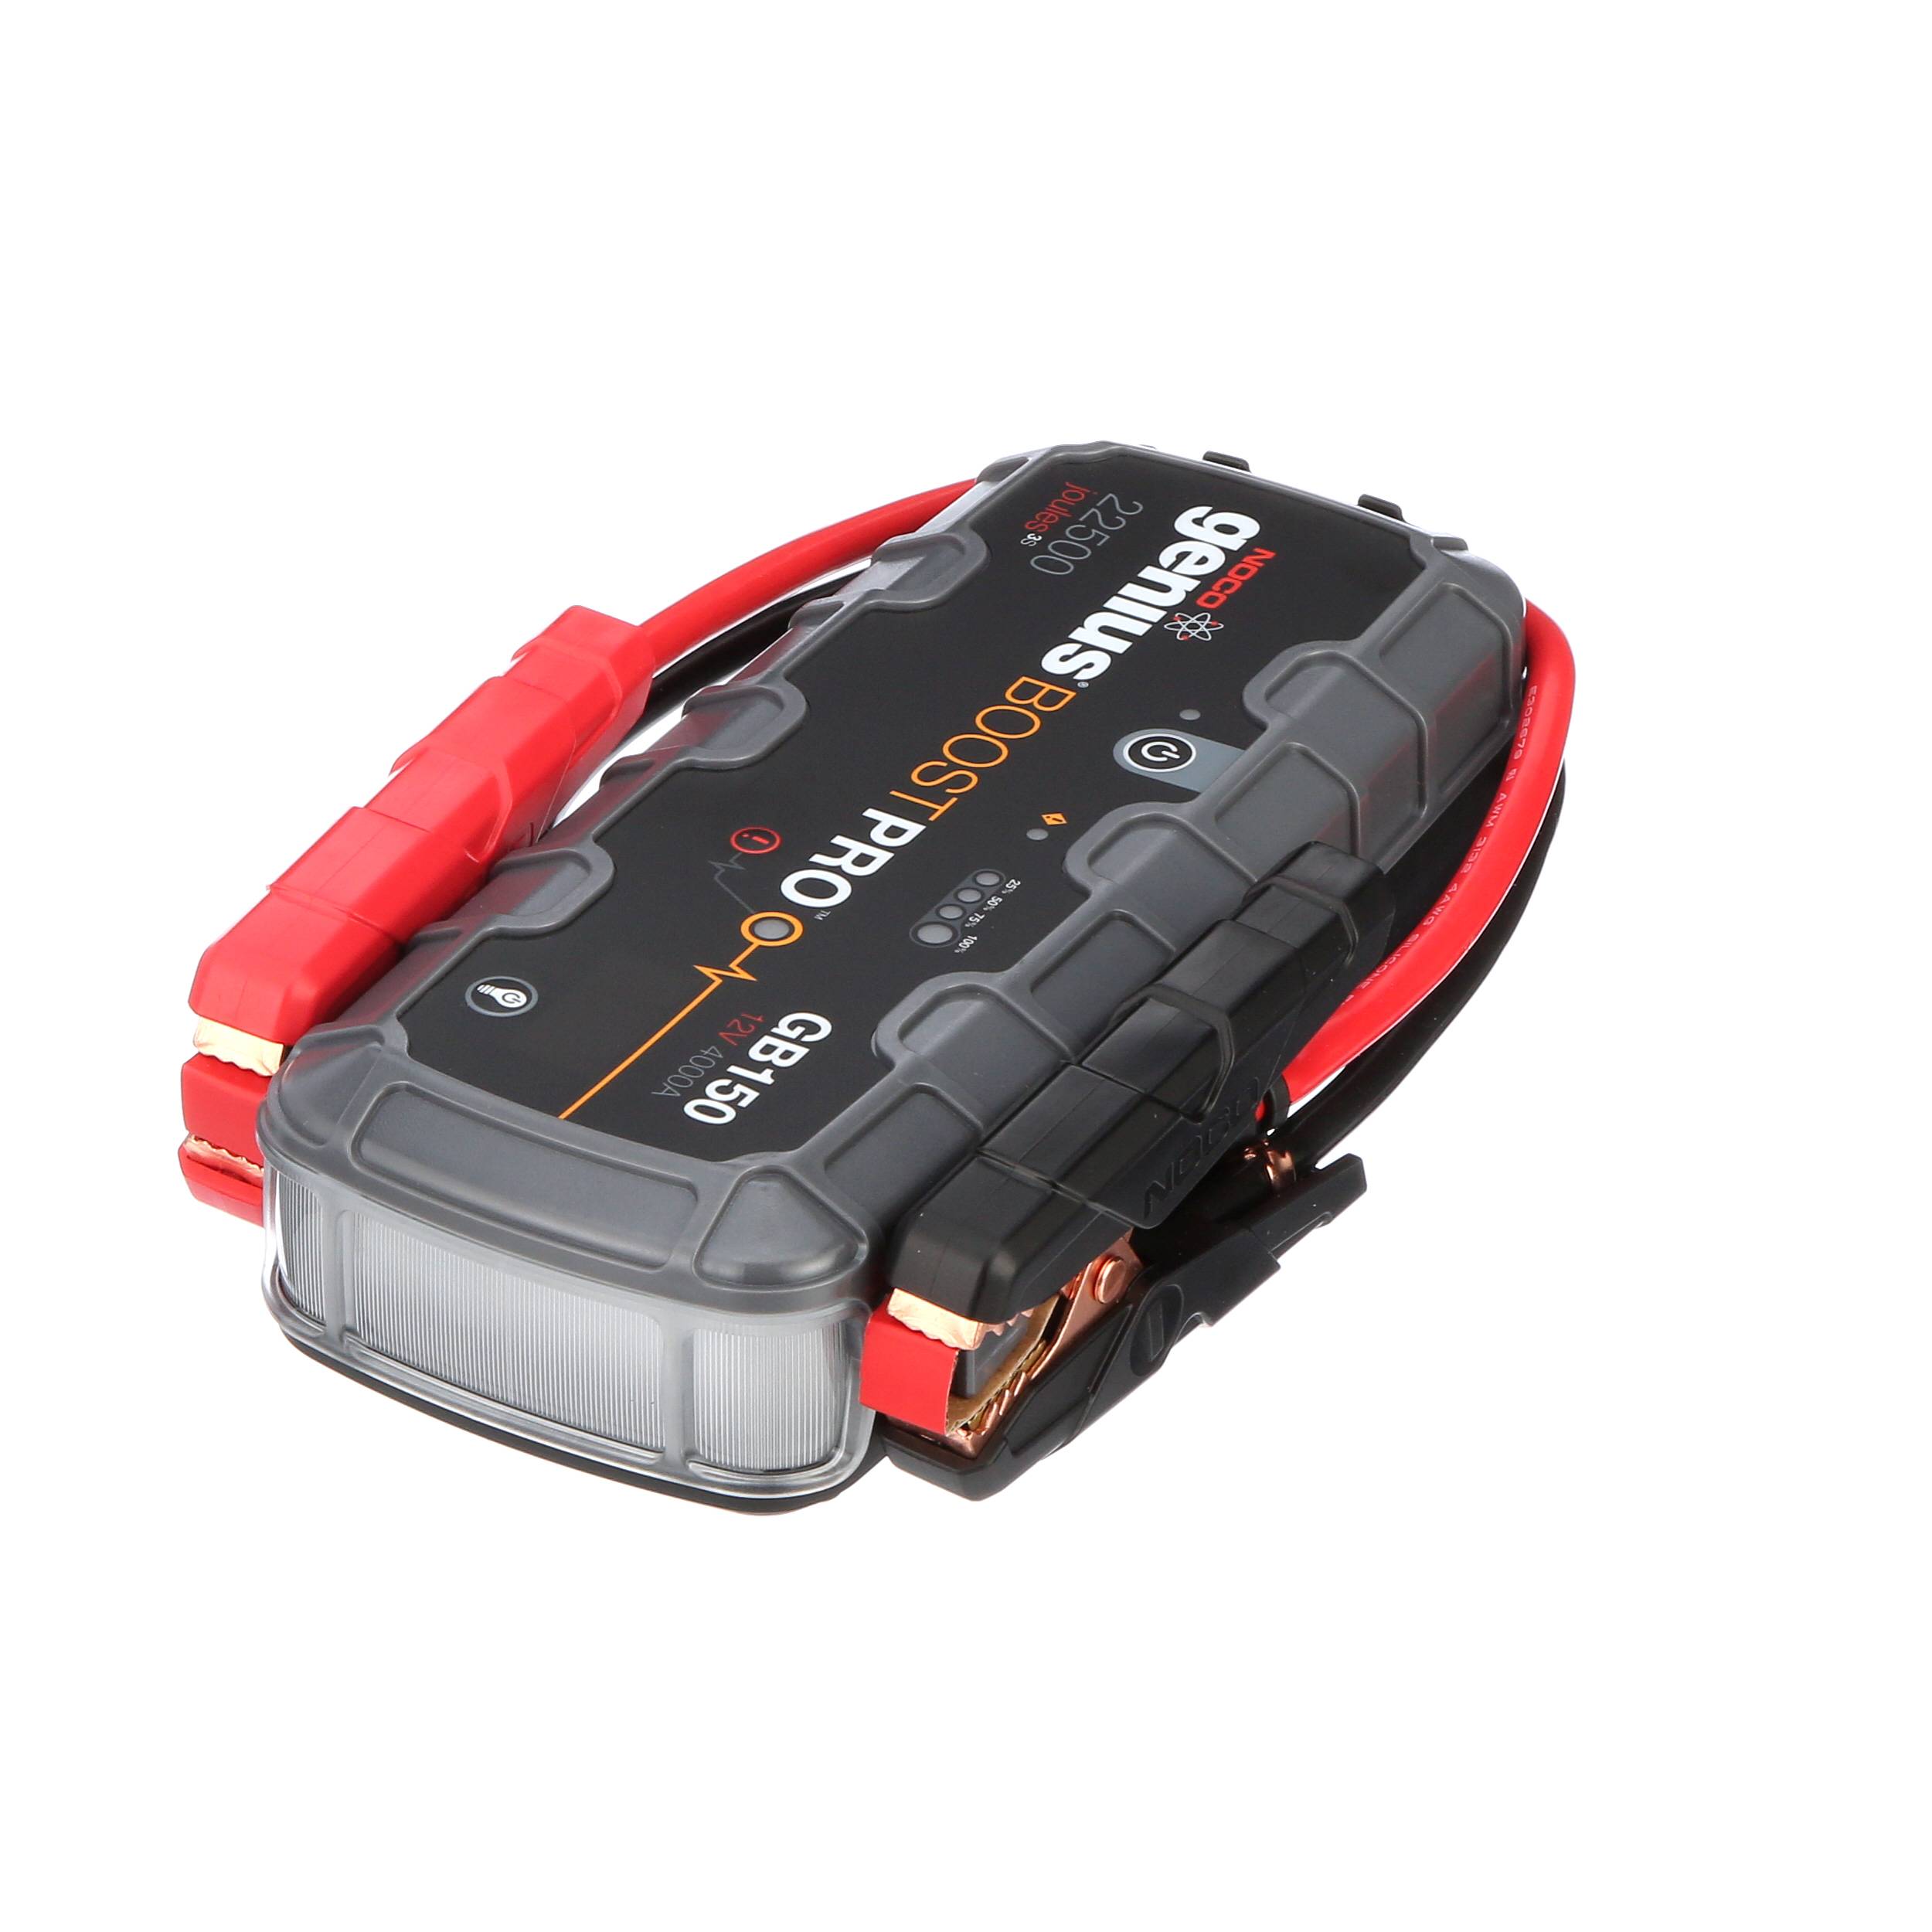 NOCO Boost Pro GB150 3000A 12V UltraSafe Portable Lithium Jump